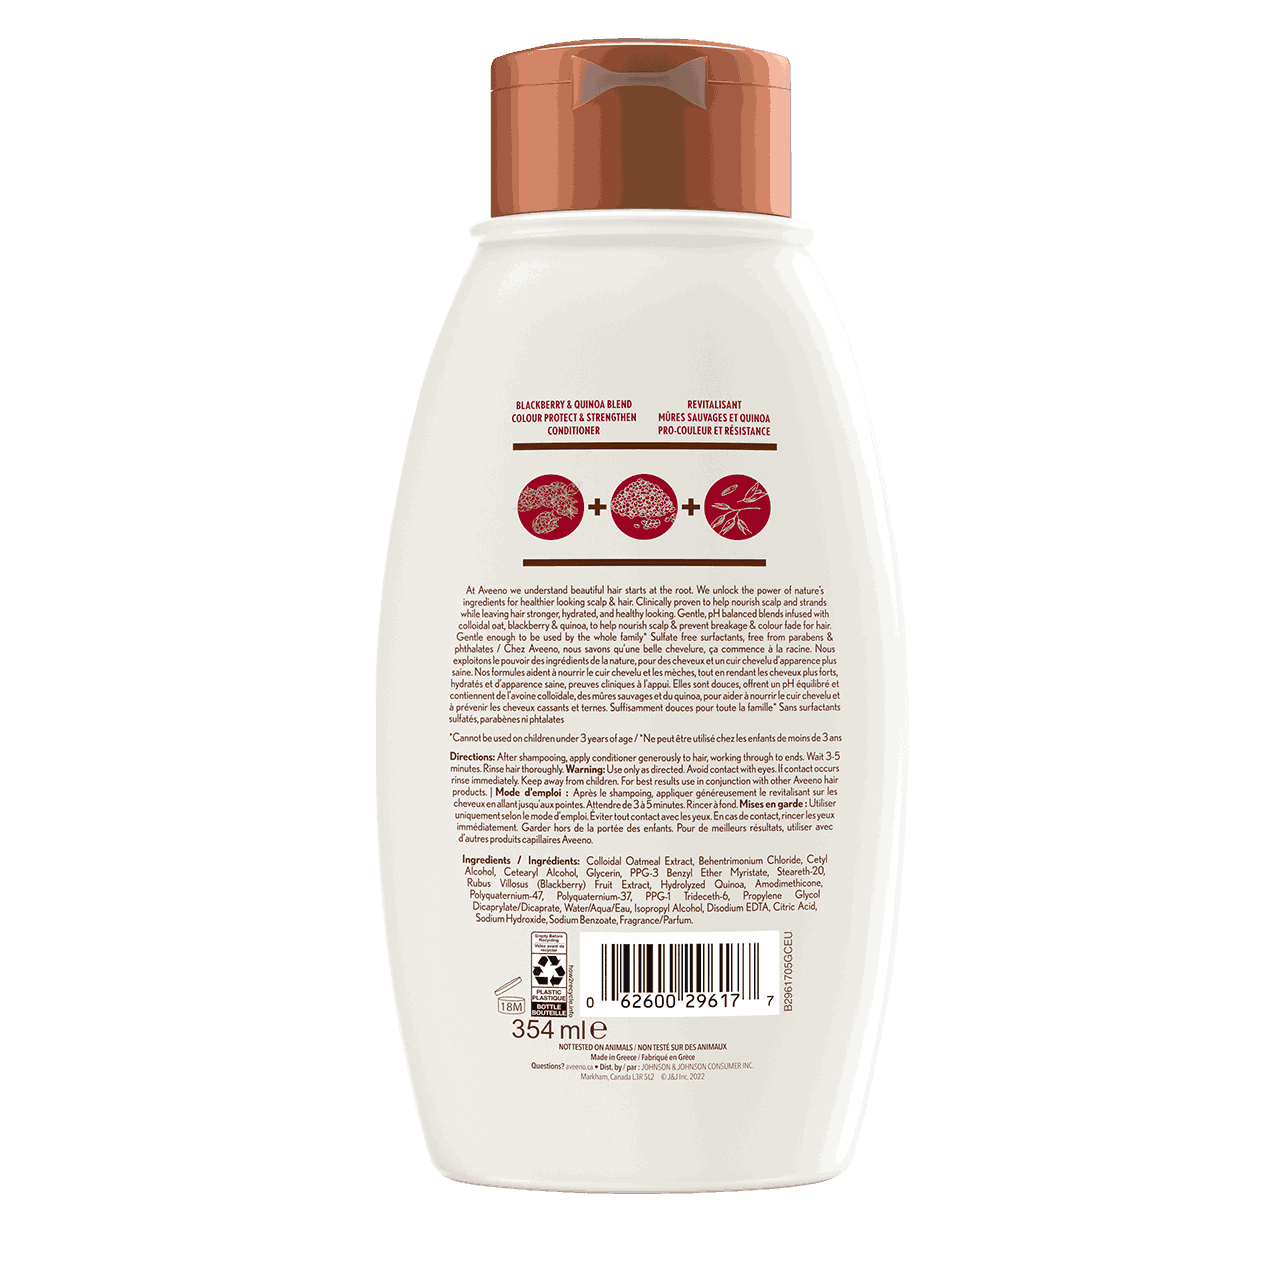 AVEENO® Blackberry Quinoa Blend Conditioner, 354ml bottle, back label